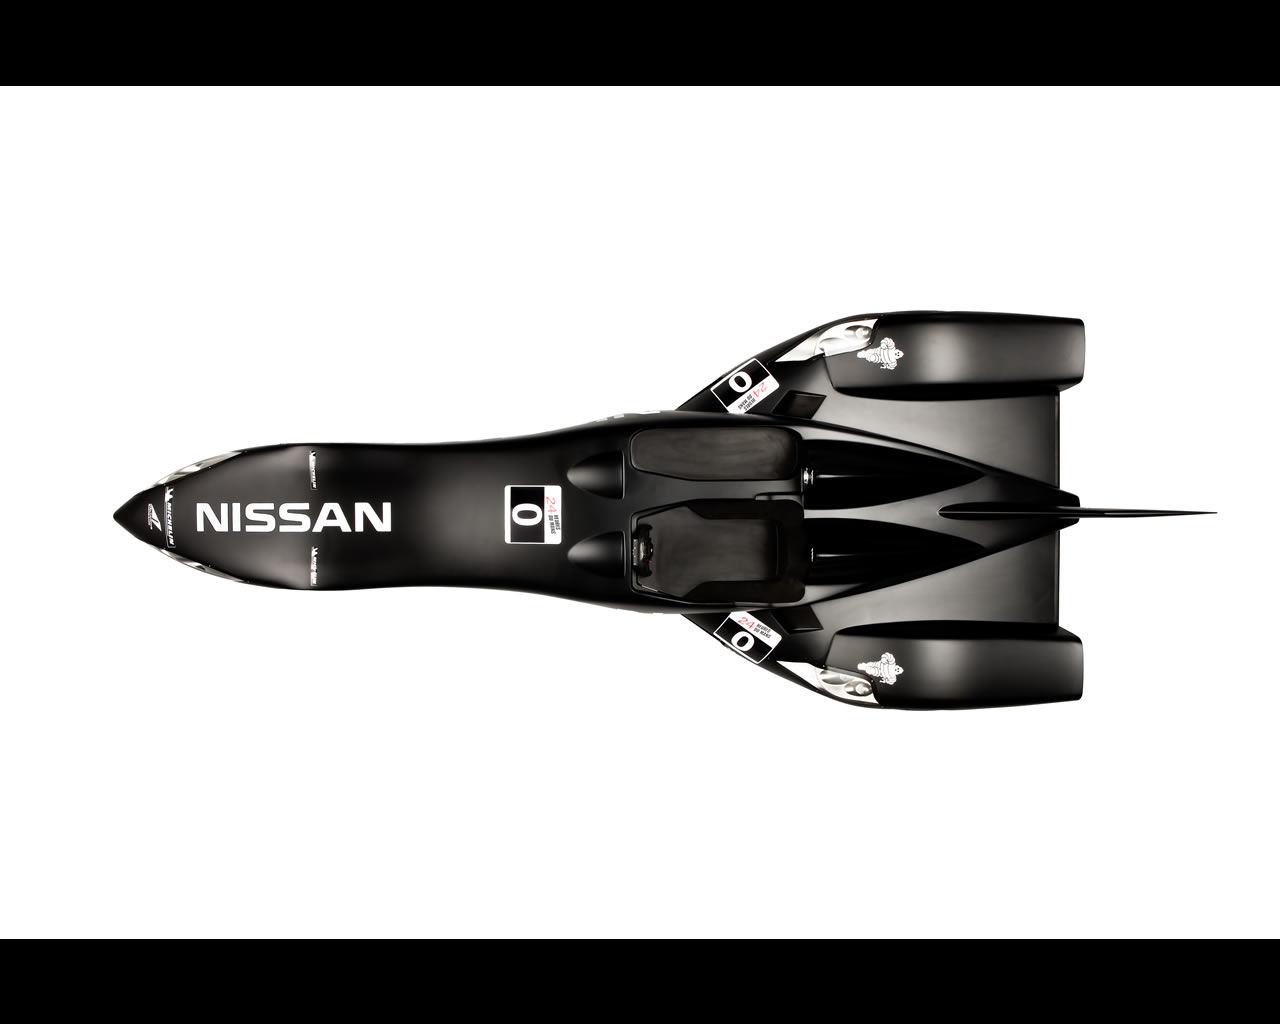 Nissan prototype race cars